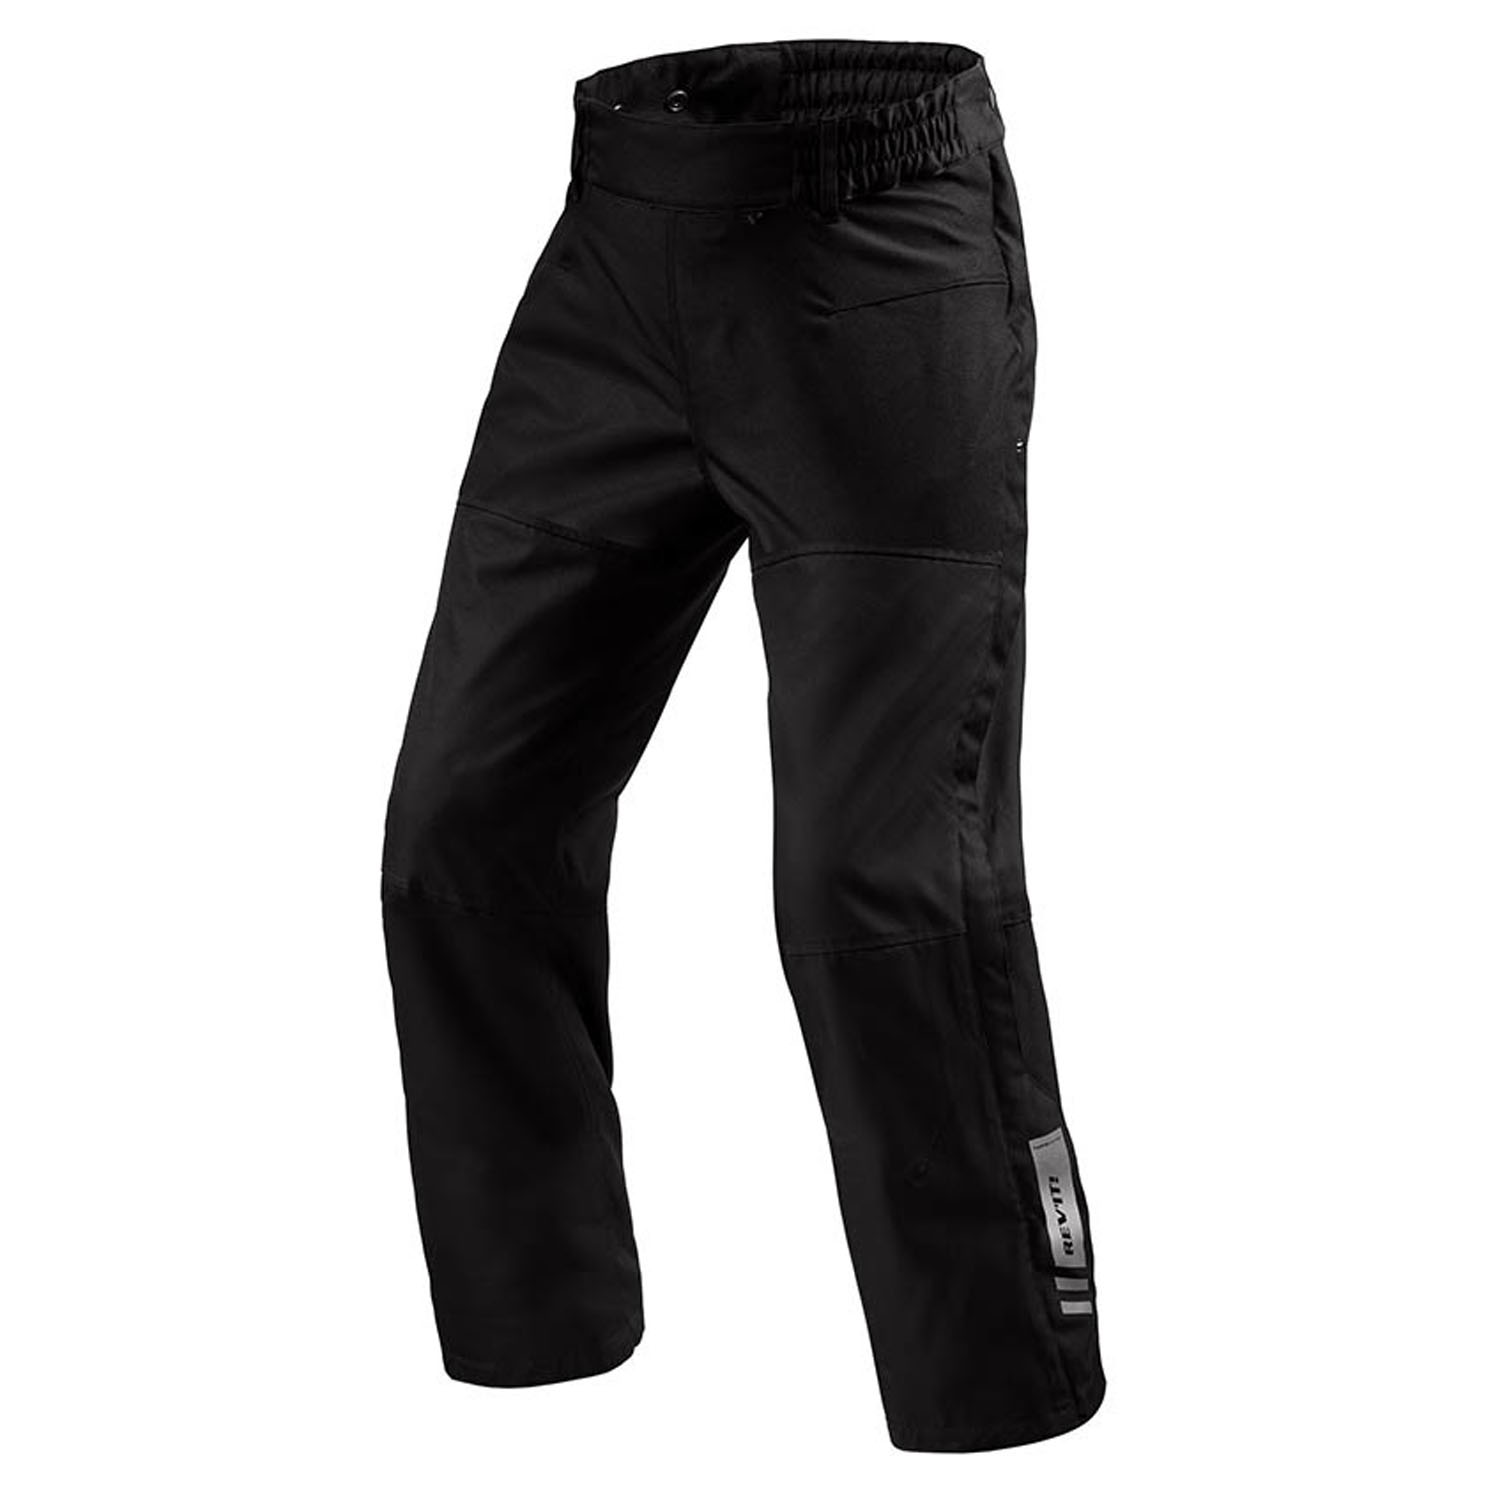 Image of REV'IT! Pants Axis 2 H2O Black Long Motorcycle Pants Size M EN